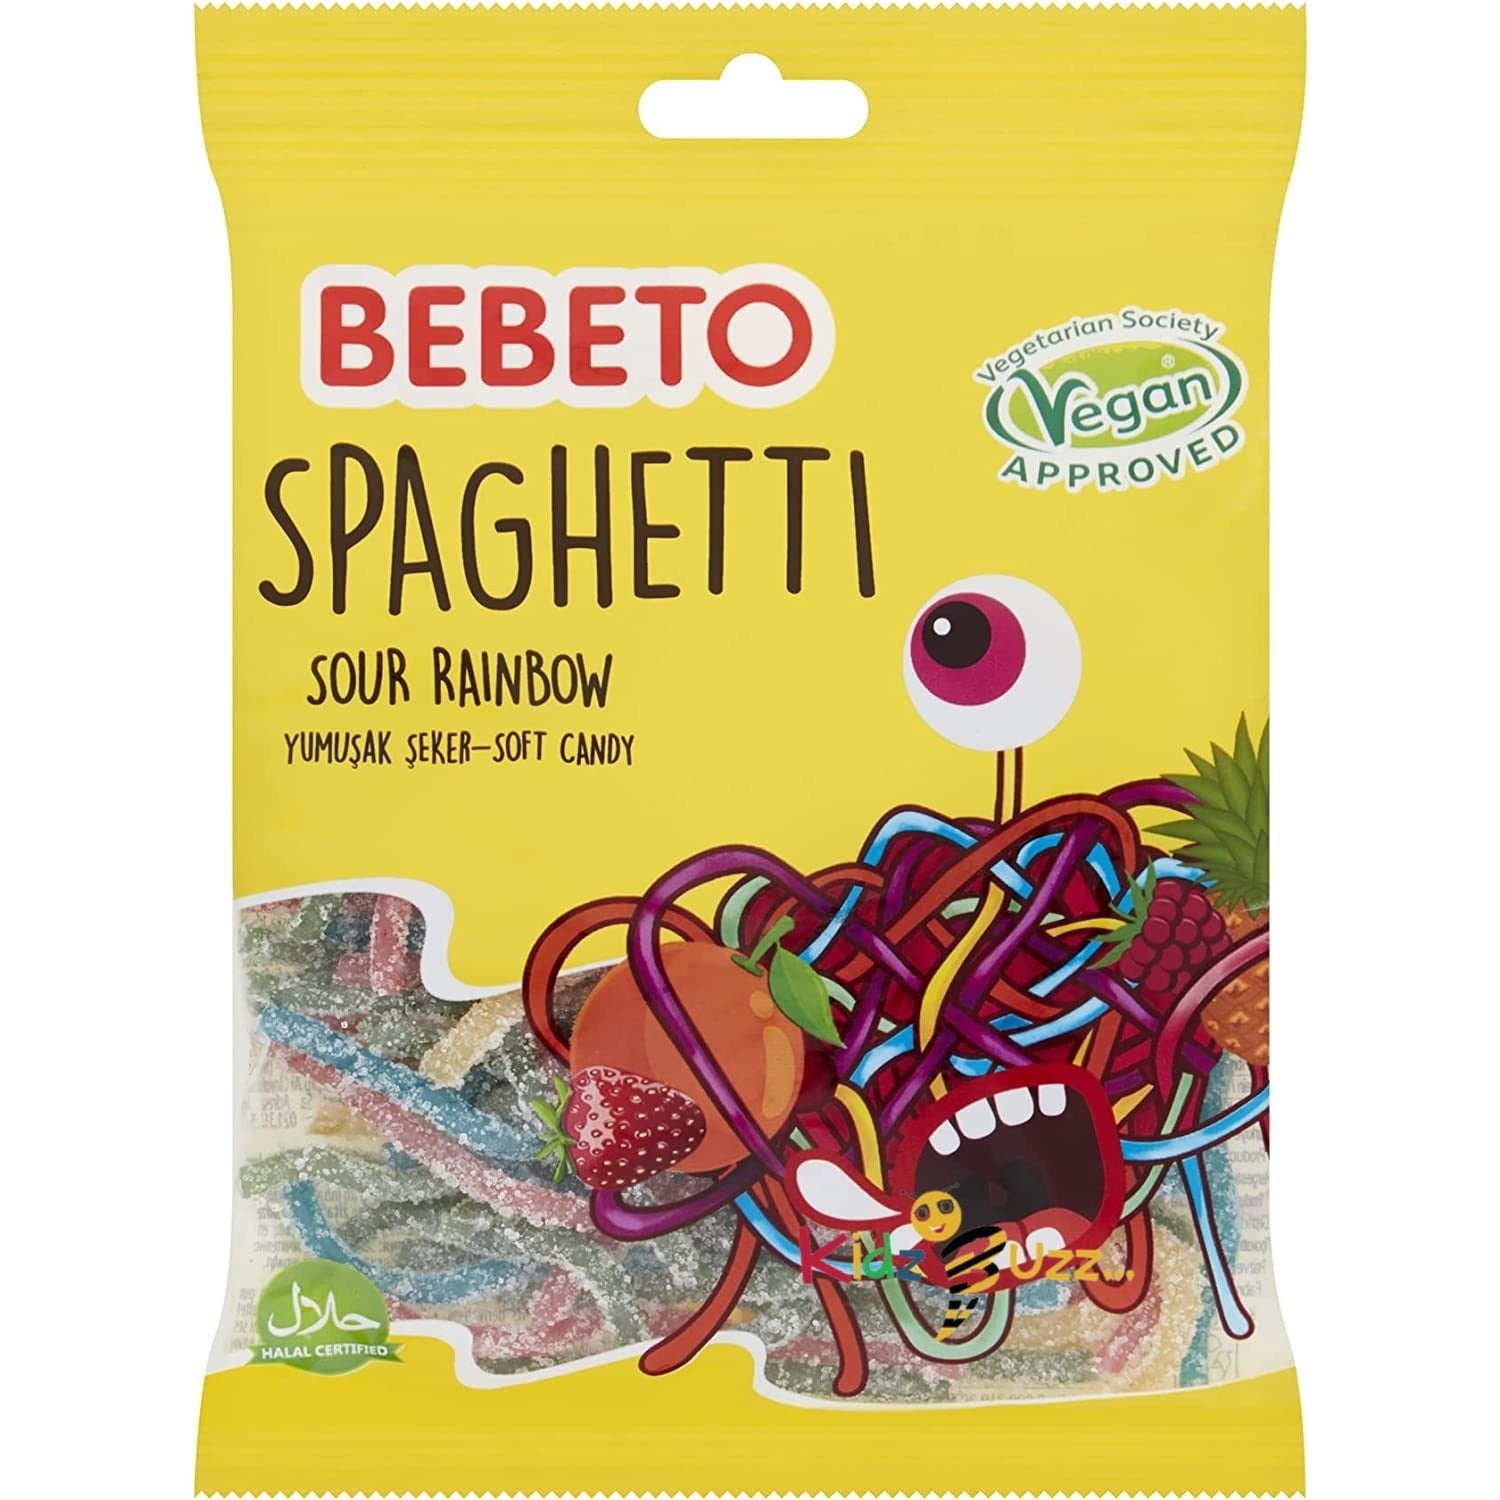 Bebeto Sour Rainbow Spaghetti Sweets - Delicious Vegan Sweets